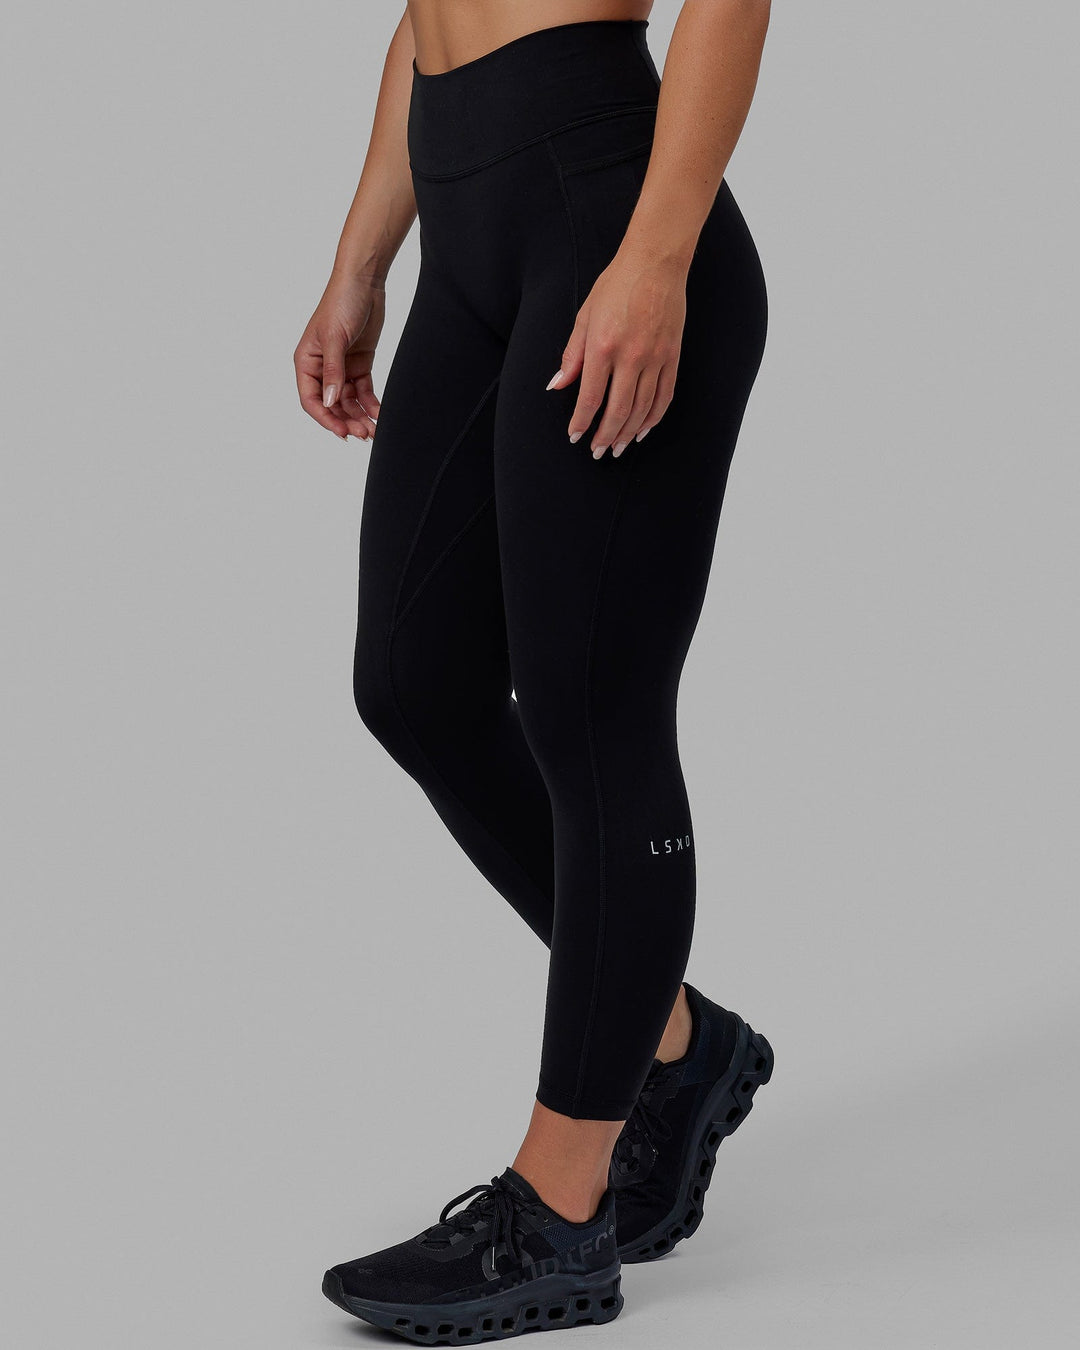 Lululemon Tight Stuff II Black Reflective Leggings - Athletic apparel